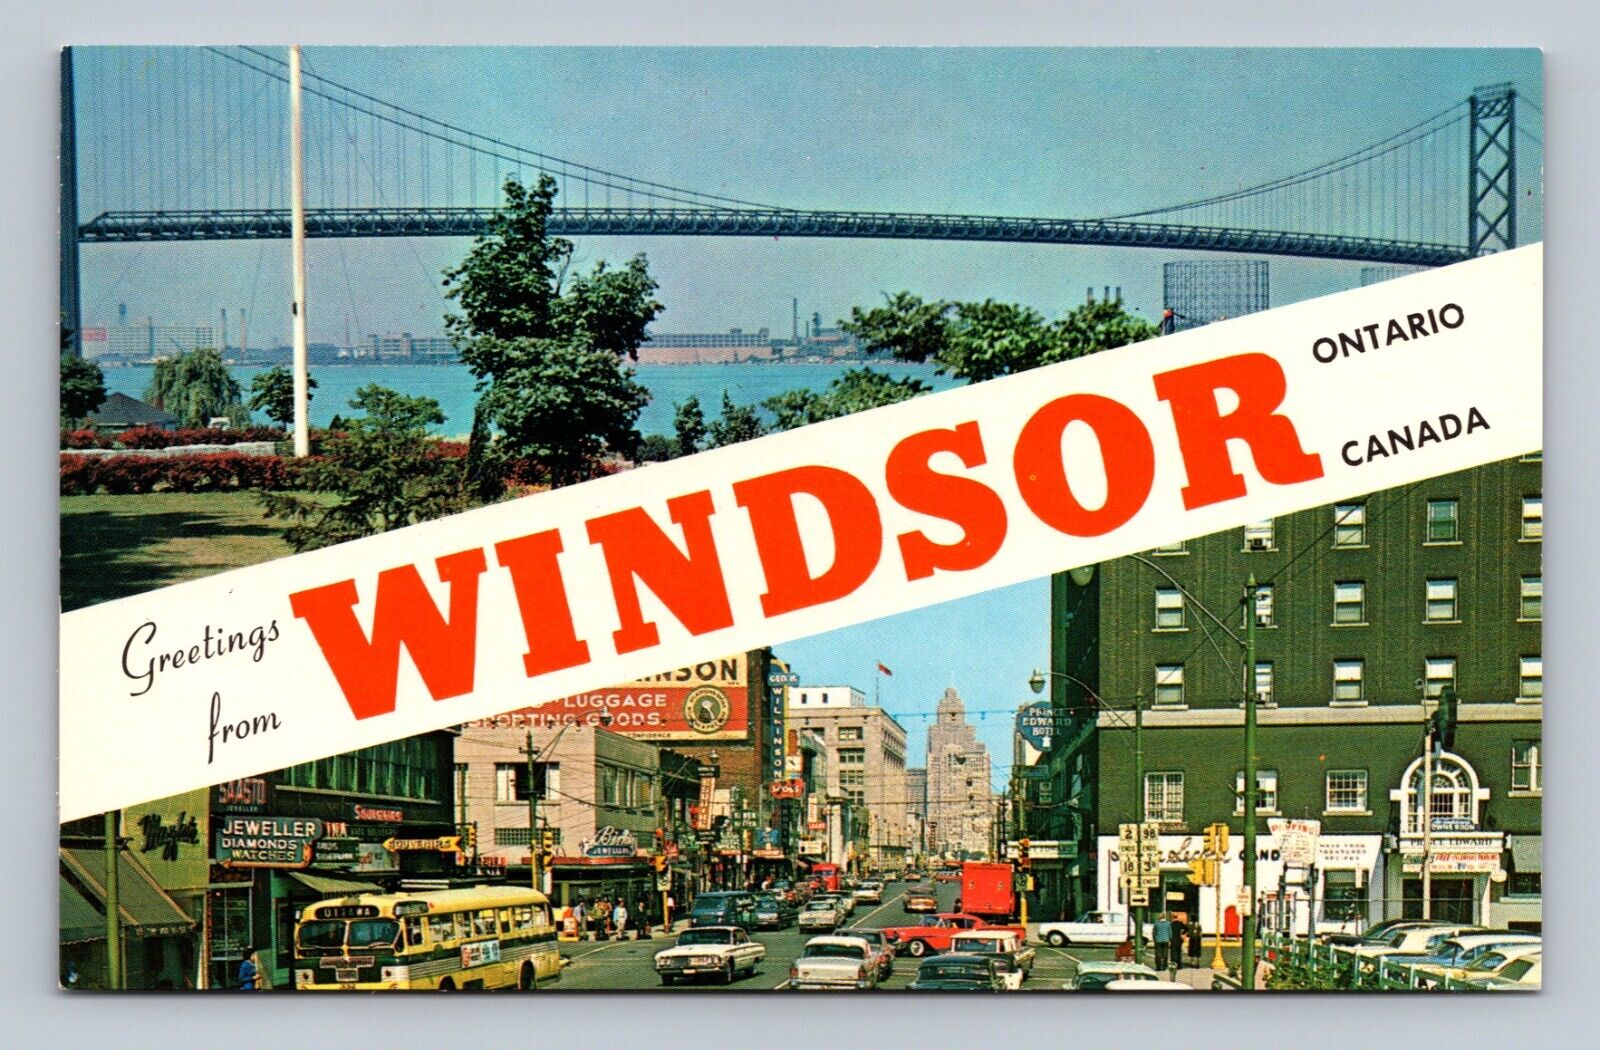 Postcard Greetings from Windsor, Ontario Canada